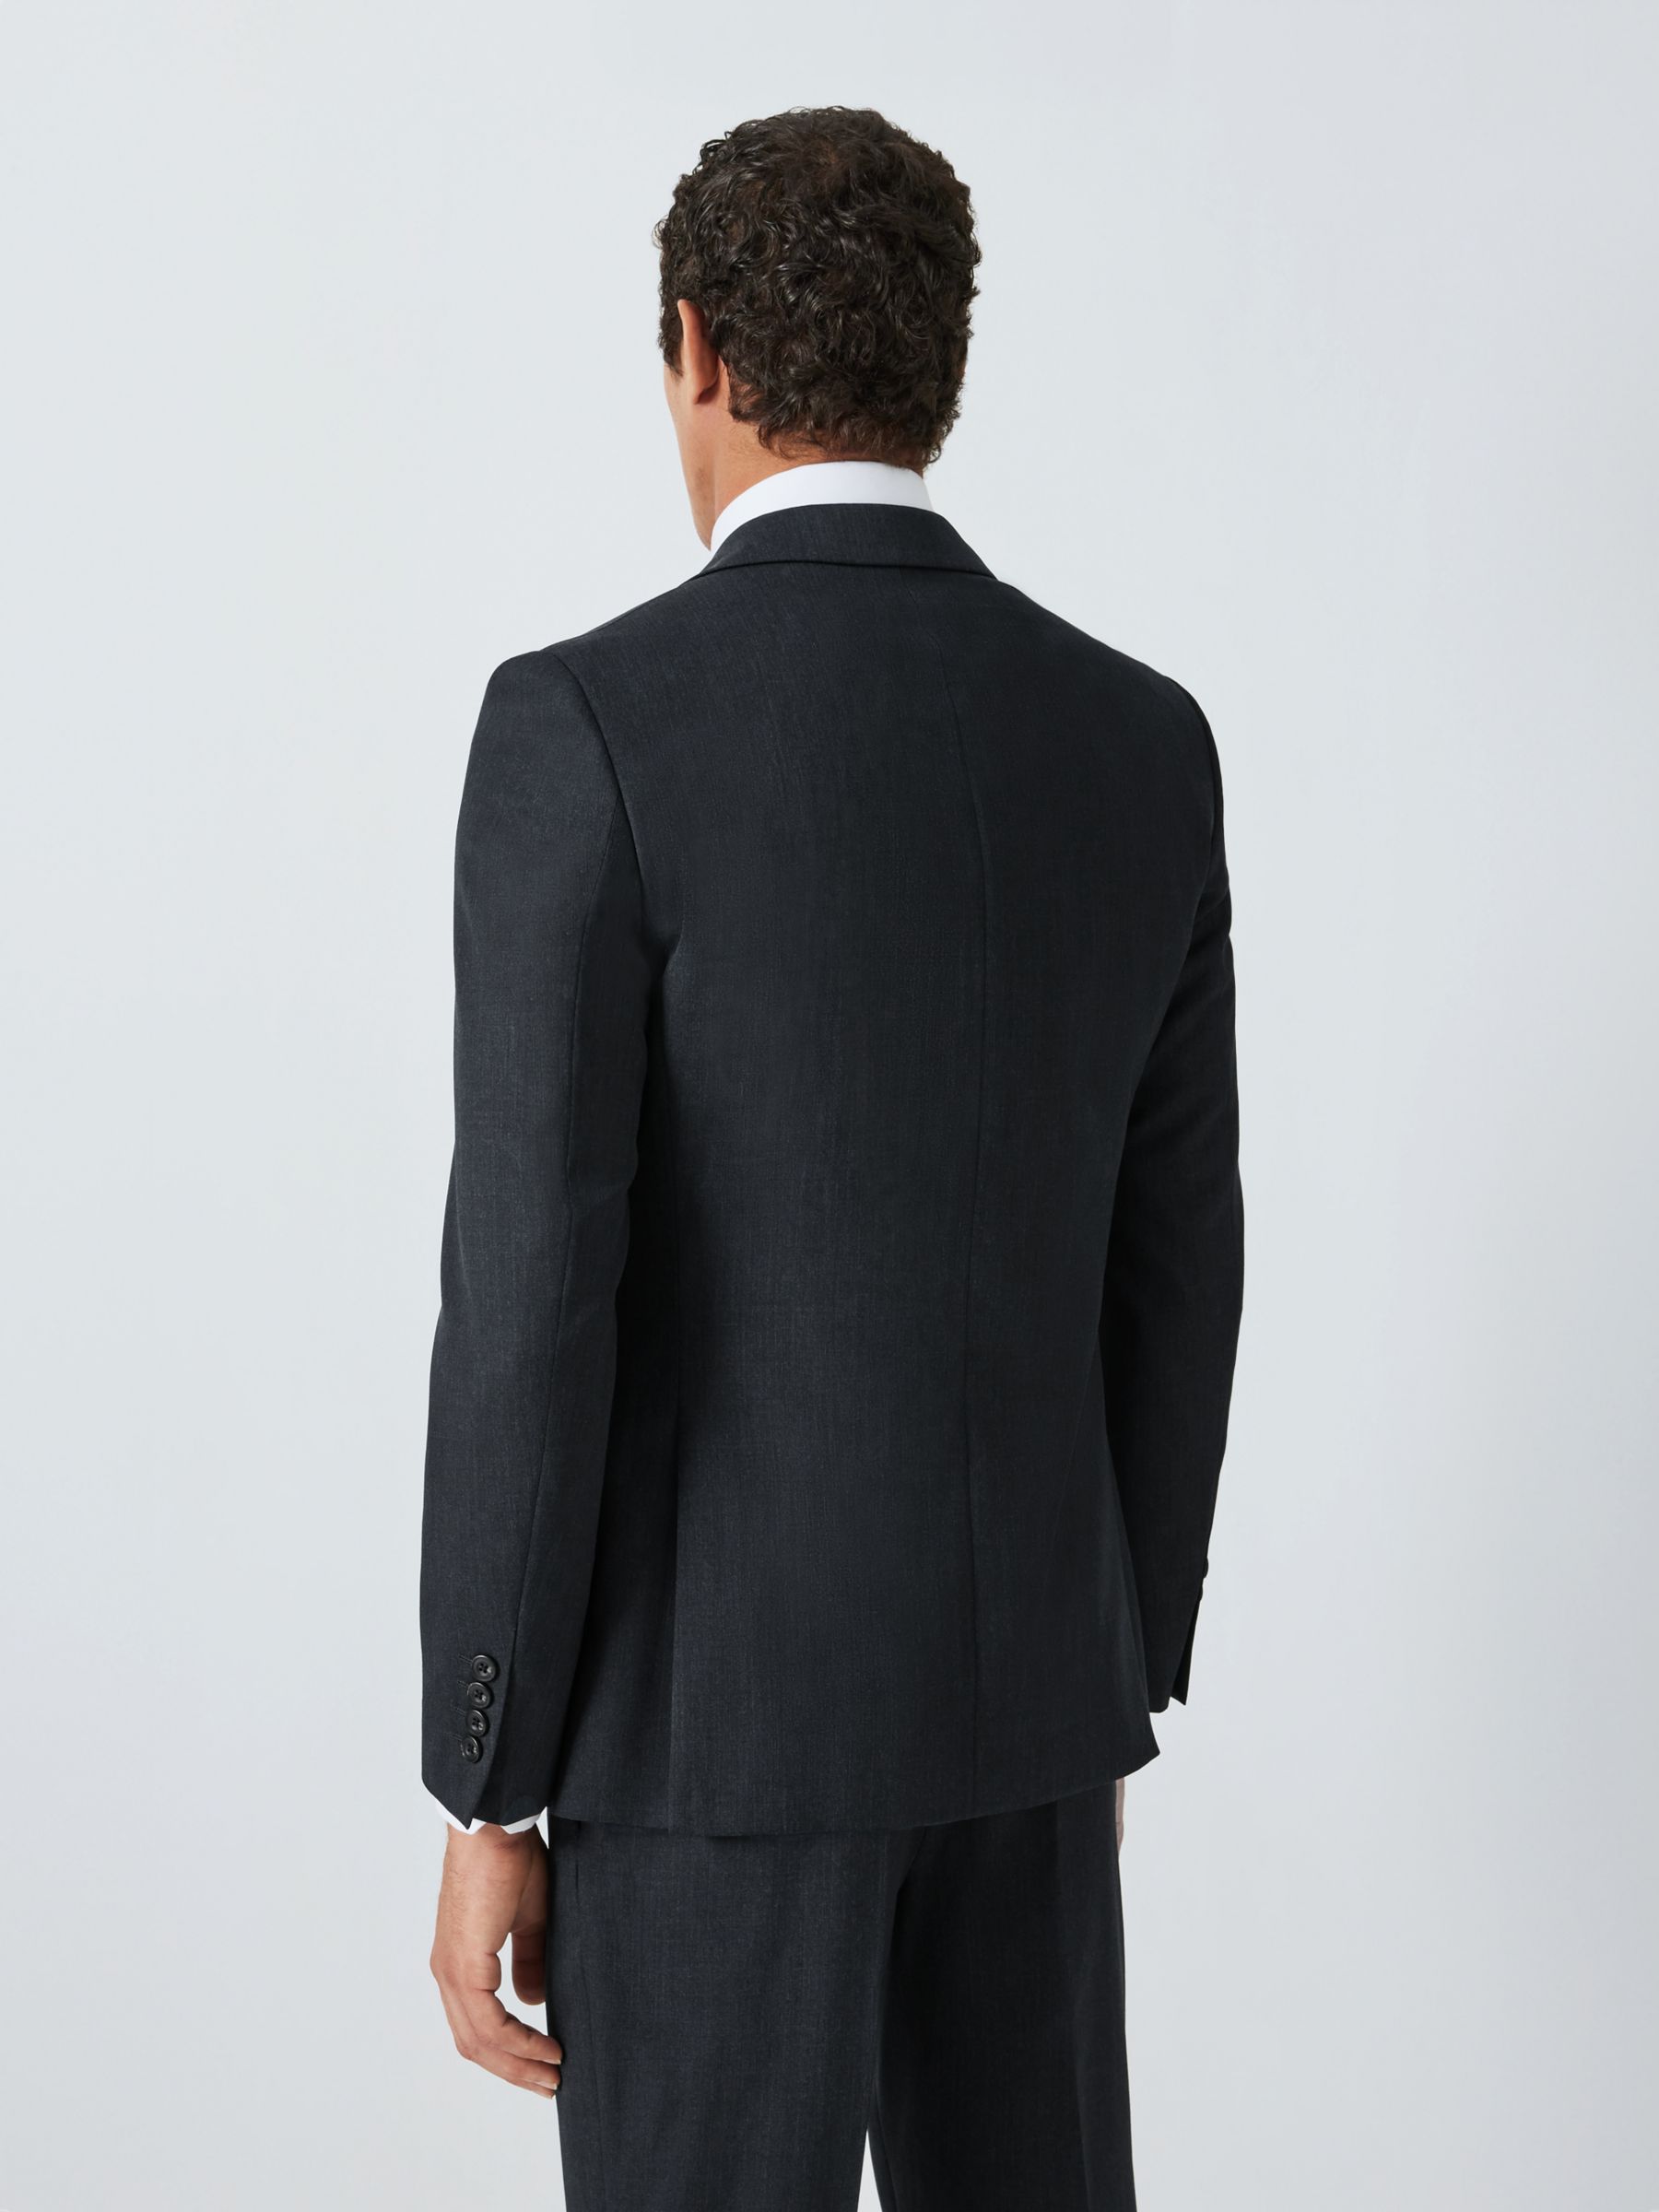 John Lewis Washable Wool Blend Regular Fit Suit Jacket, Charcoal, 42R